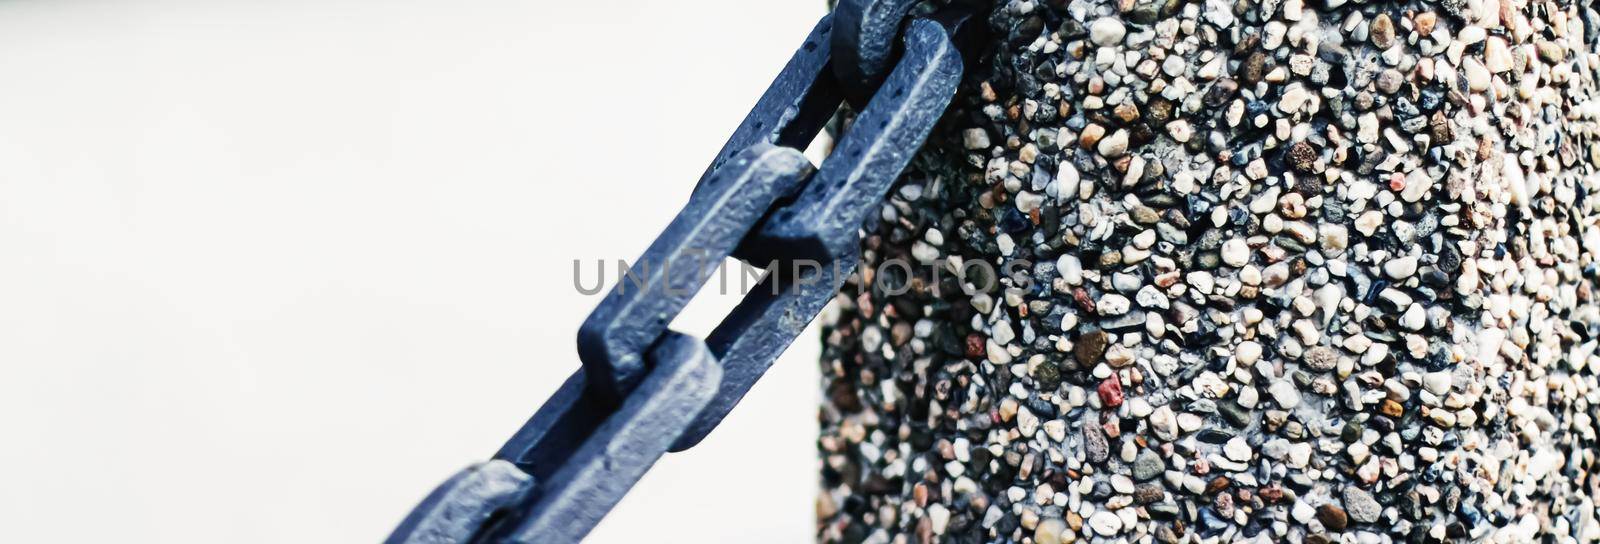 Metal chain closeup, marine background.